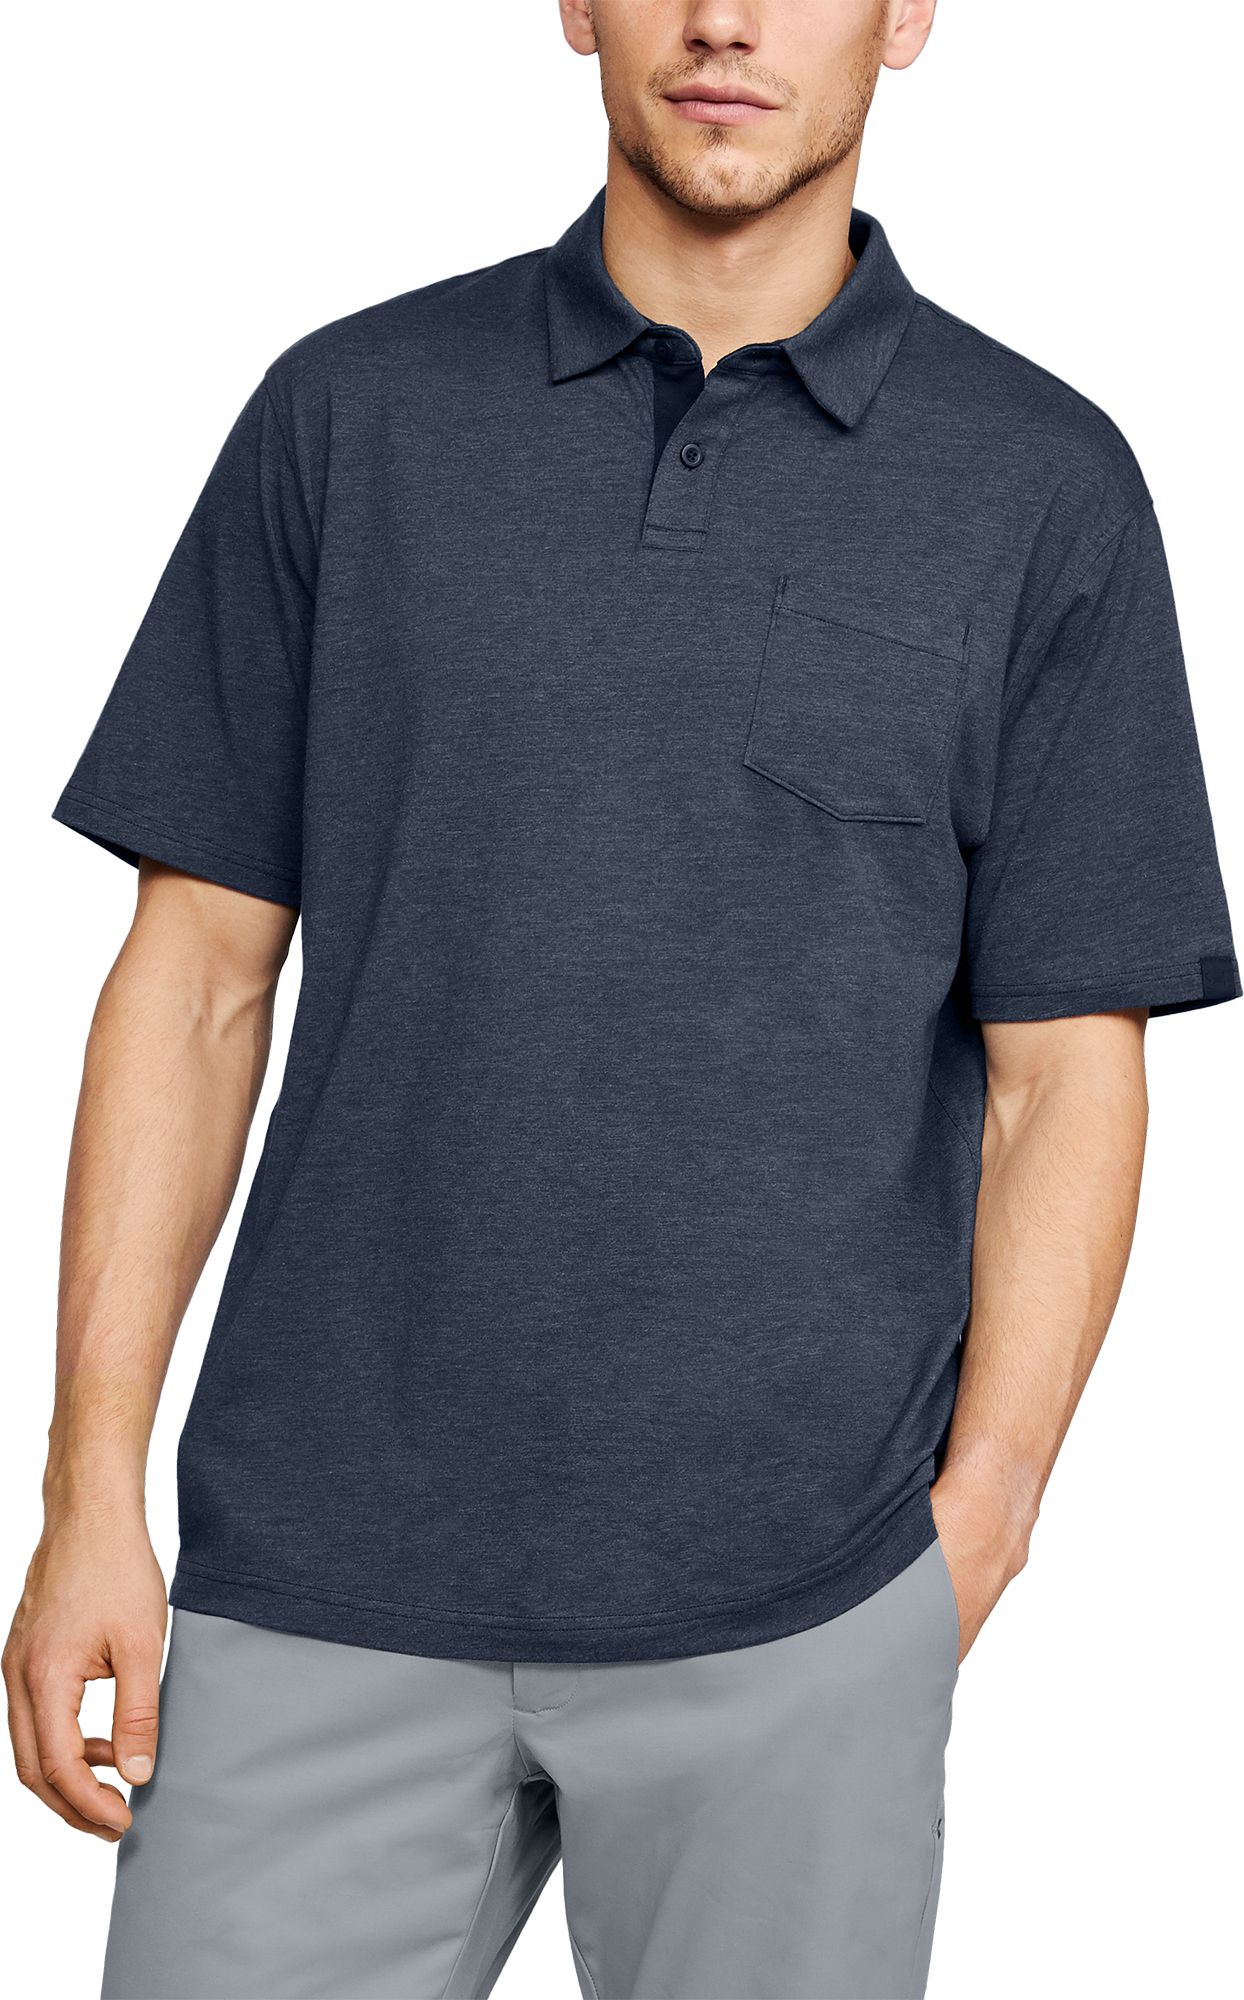 Charged Cotton Scramble Golf Polo Shirt 